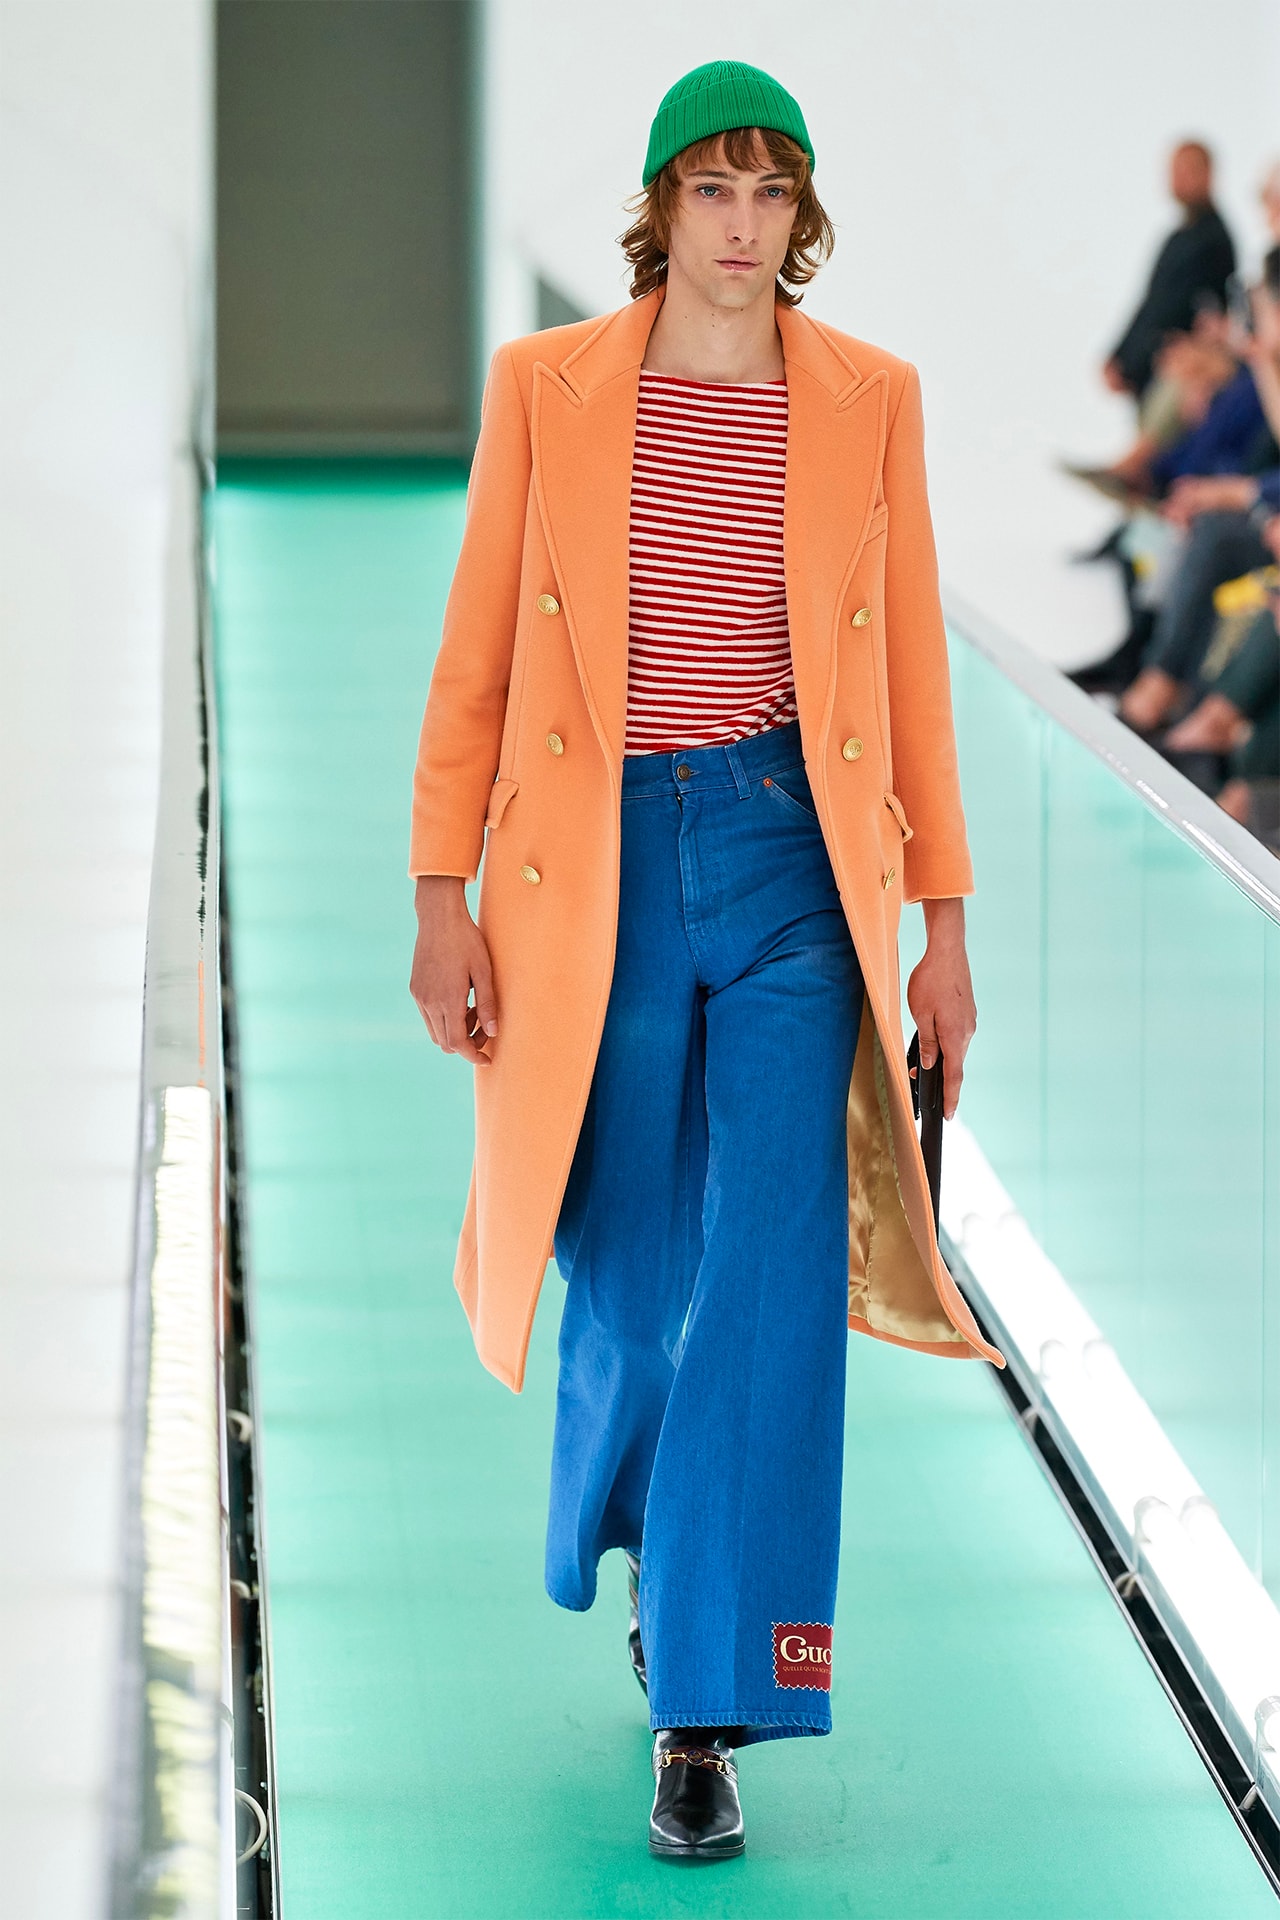 Gucci Orgasmique Spring Summer 2020 Runway Show Milan Fashion Week SS20 orange coat